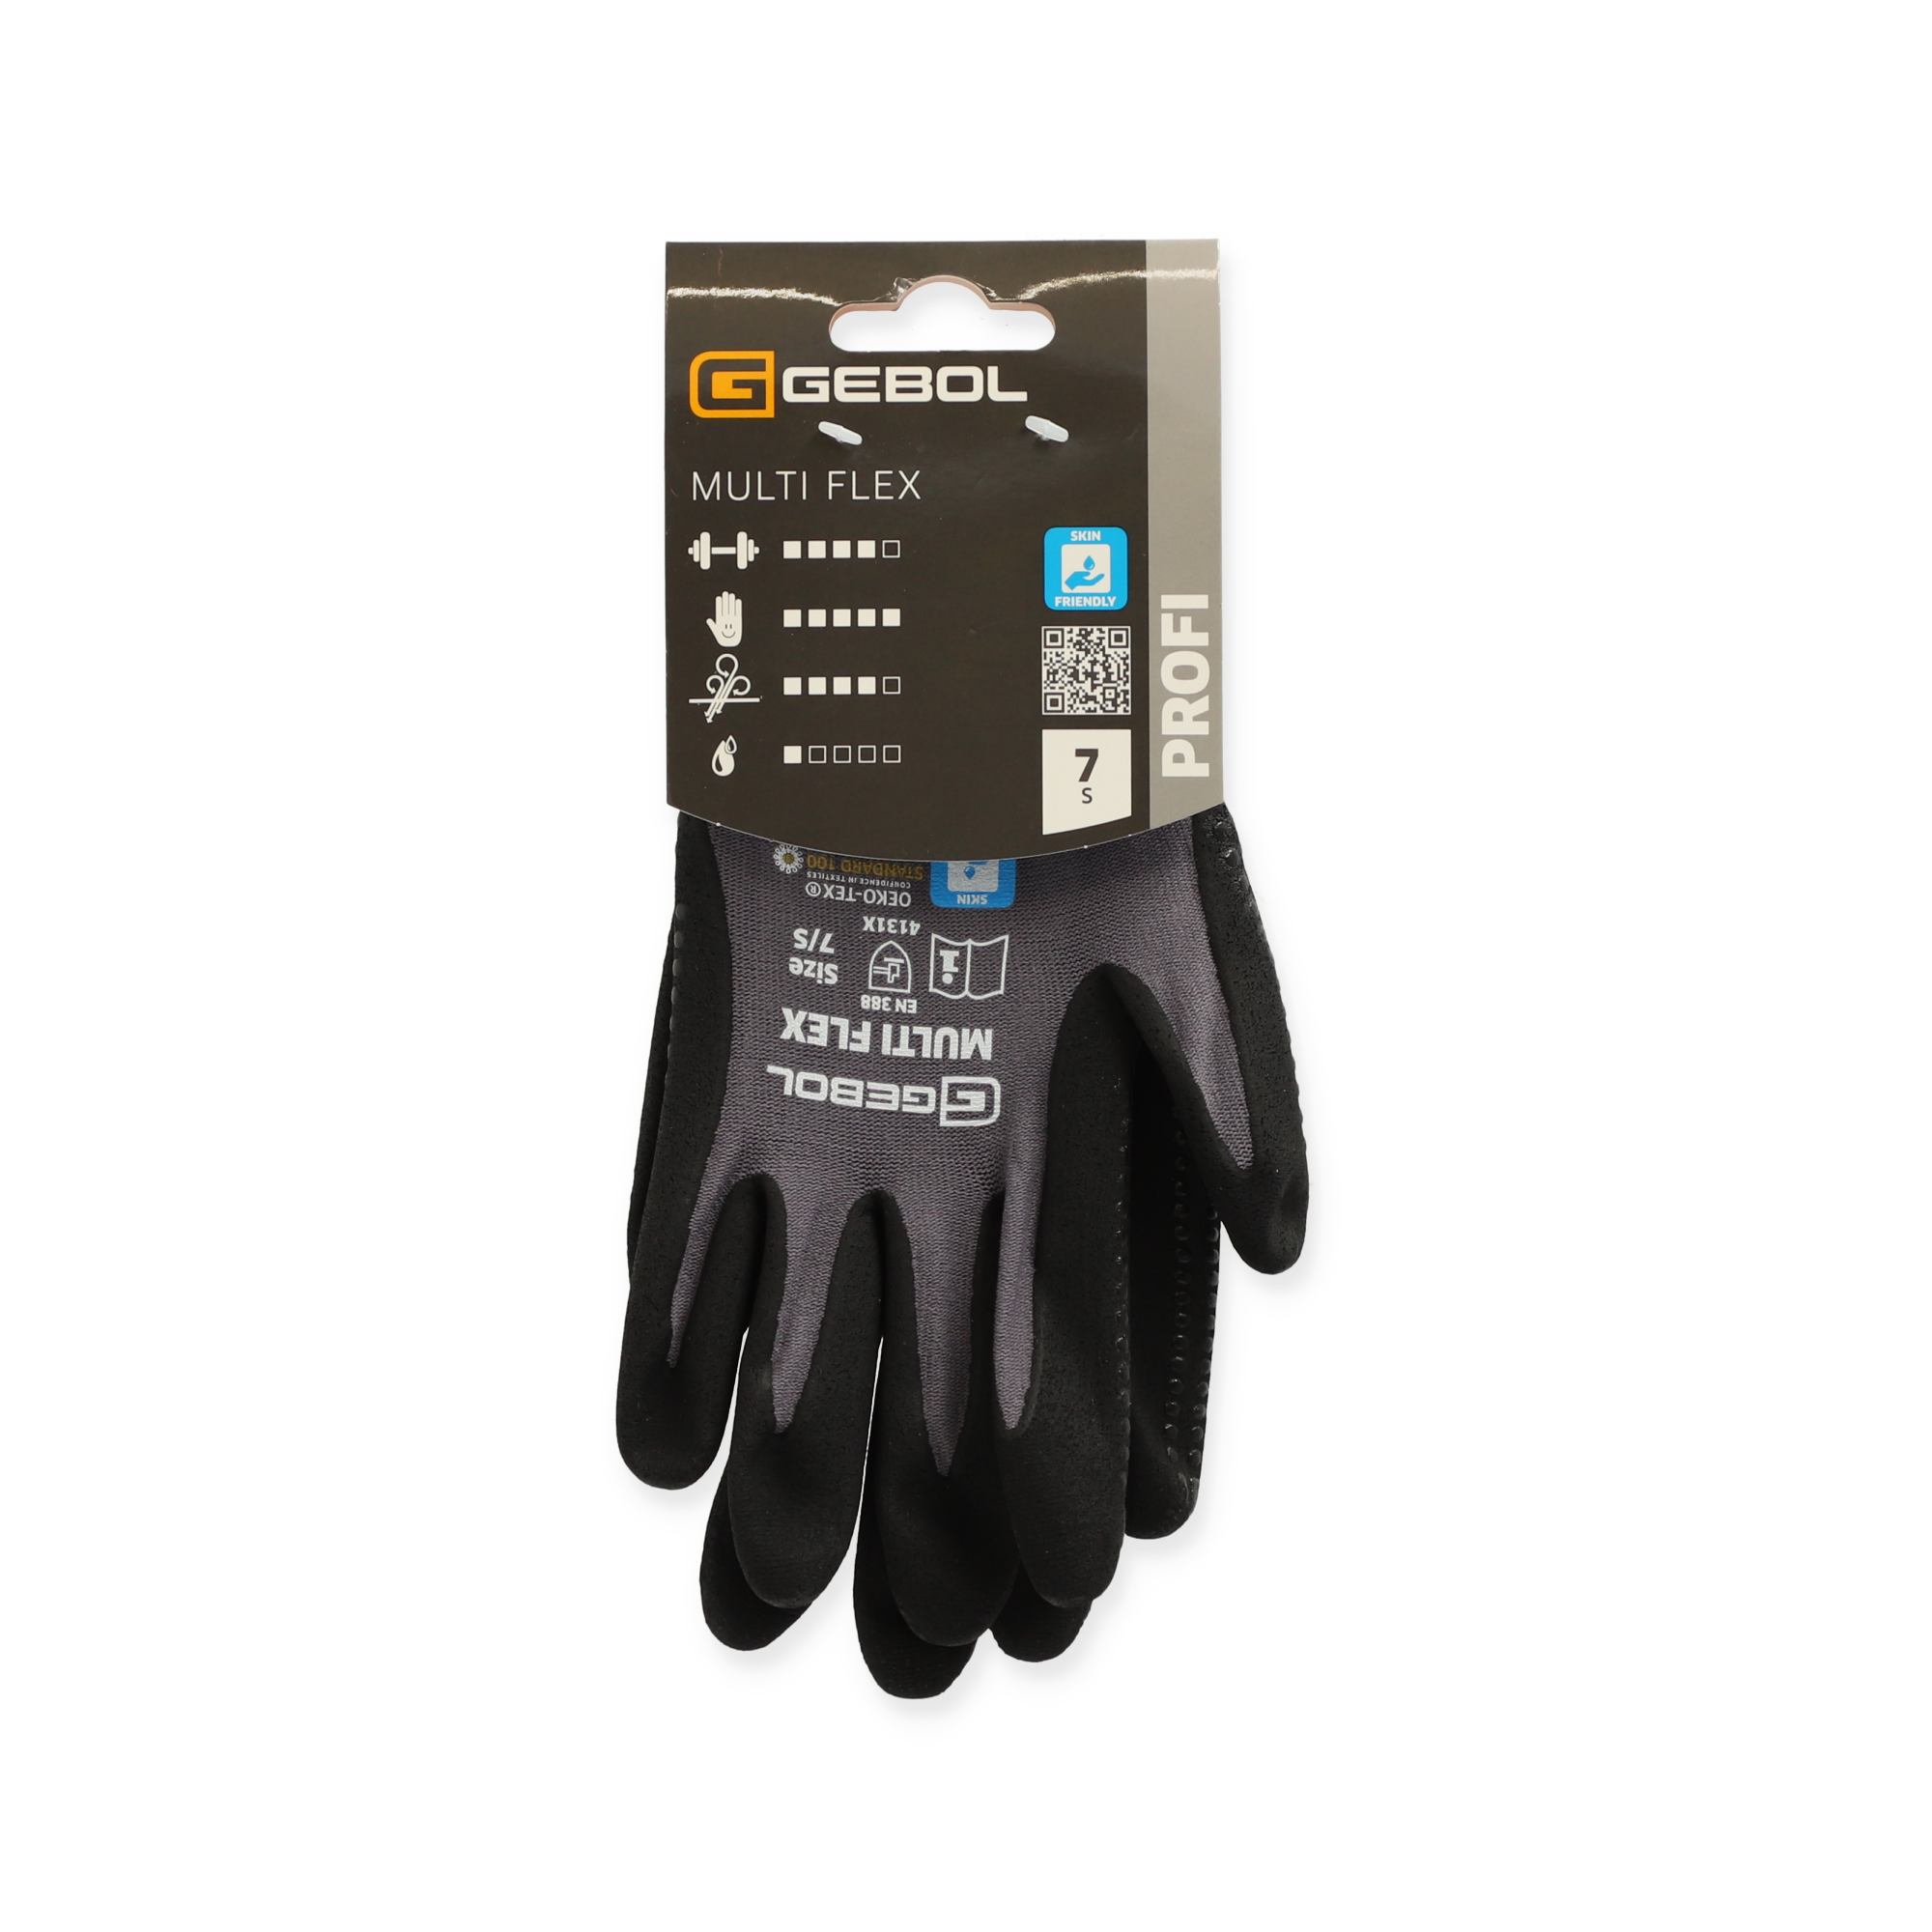 Handschuhe 'Multi Flex' grau Gr. 7 + product picture